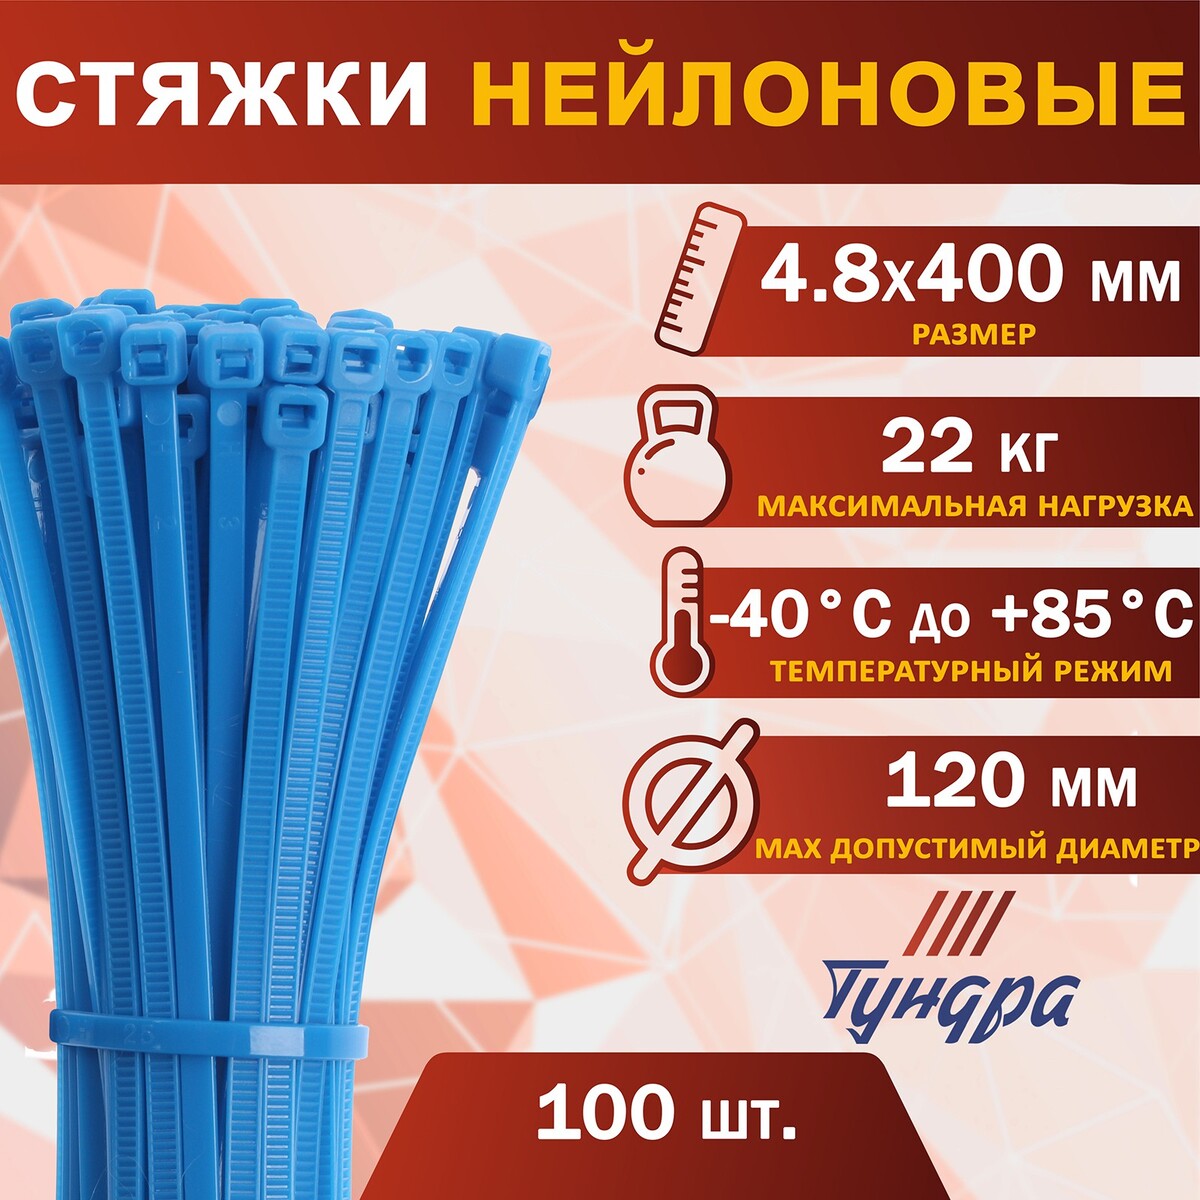 Хомут нейлоновый тундра krep, для стяжки, 4.8х400 мм, цвет синий, в упаковке 100 шт.